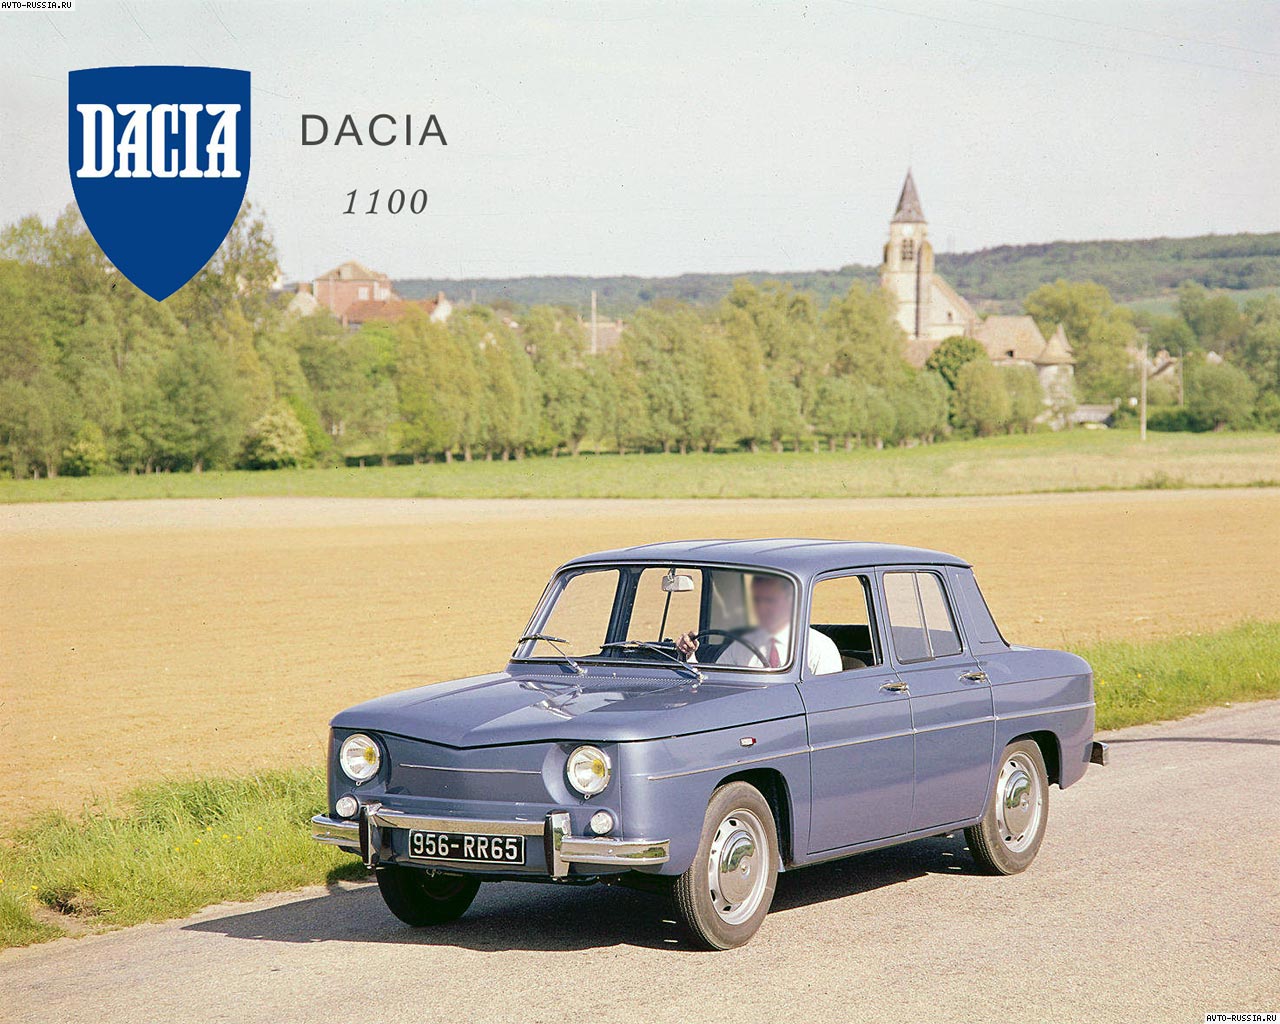 Dacia 1100 1971avto-russia ru dacia_1100_1280x1024